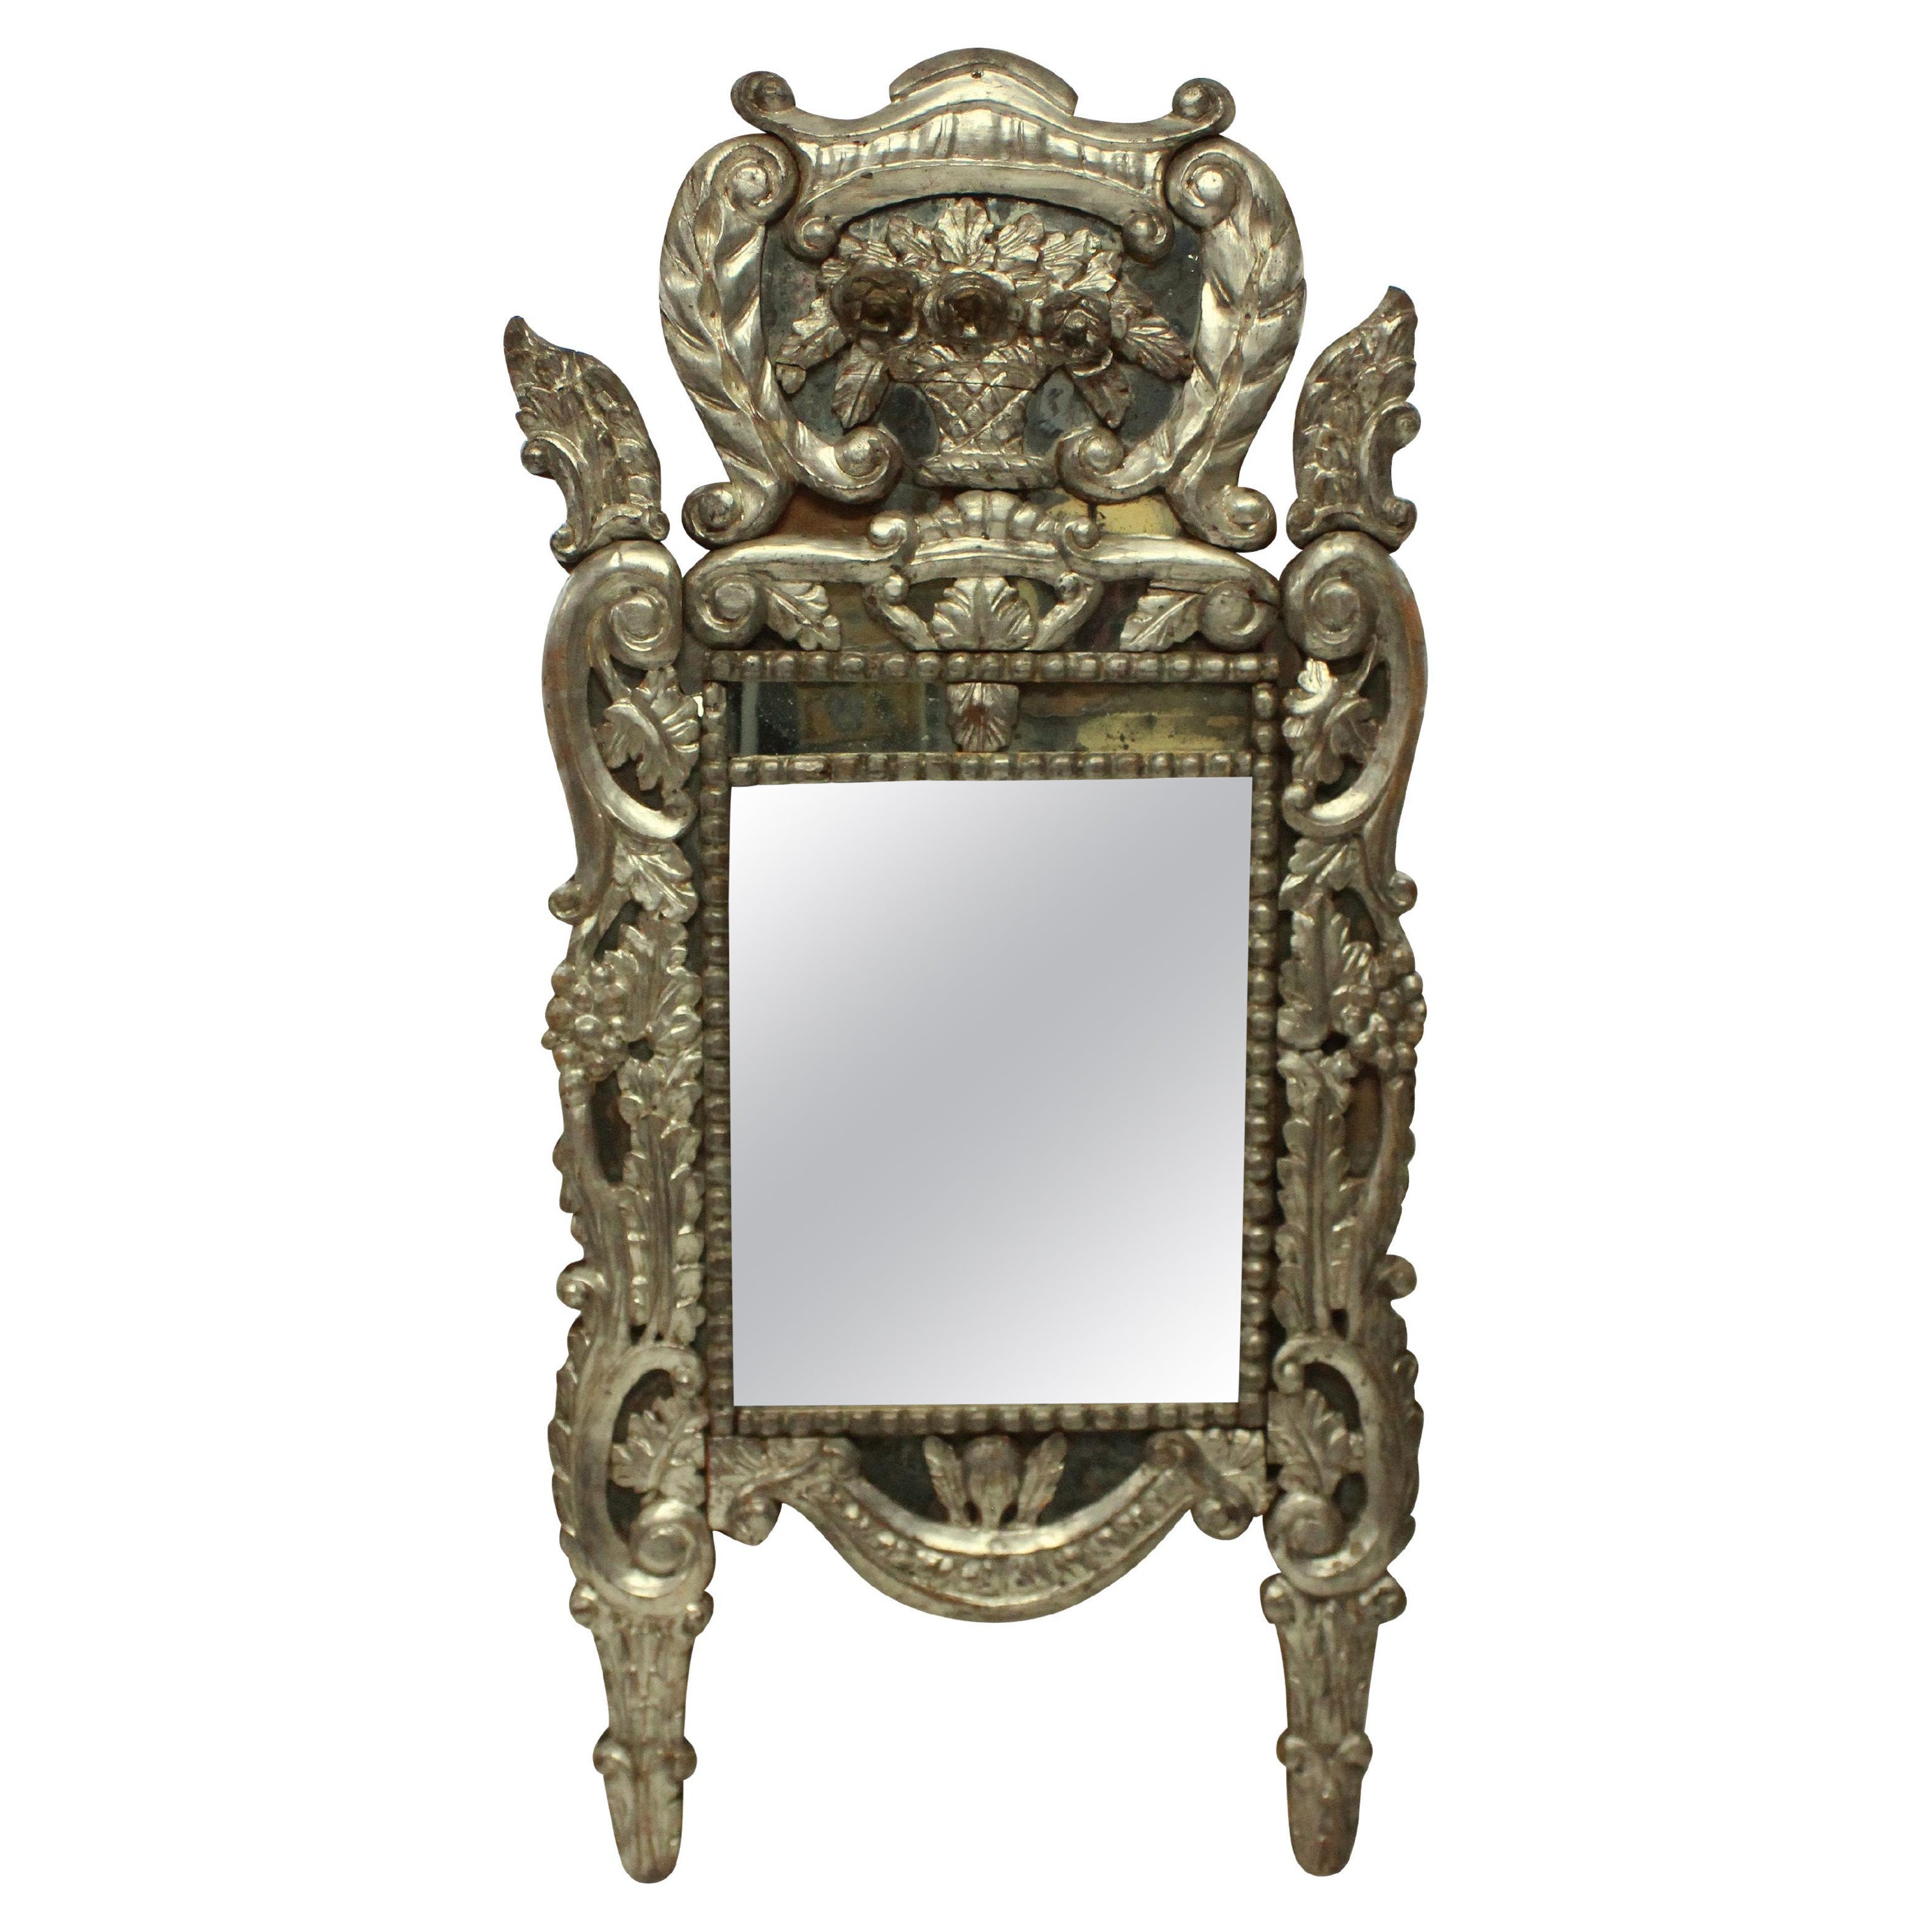 18th Century Venetian Mirror in Silver Leaf